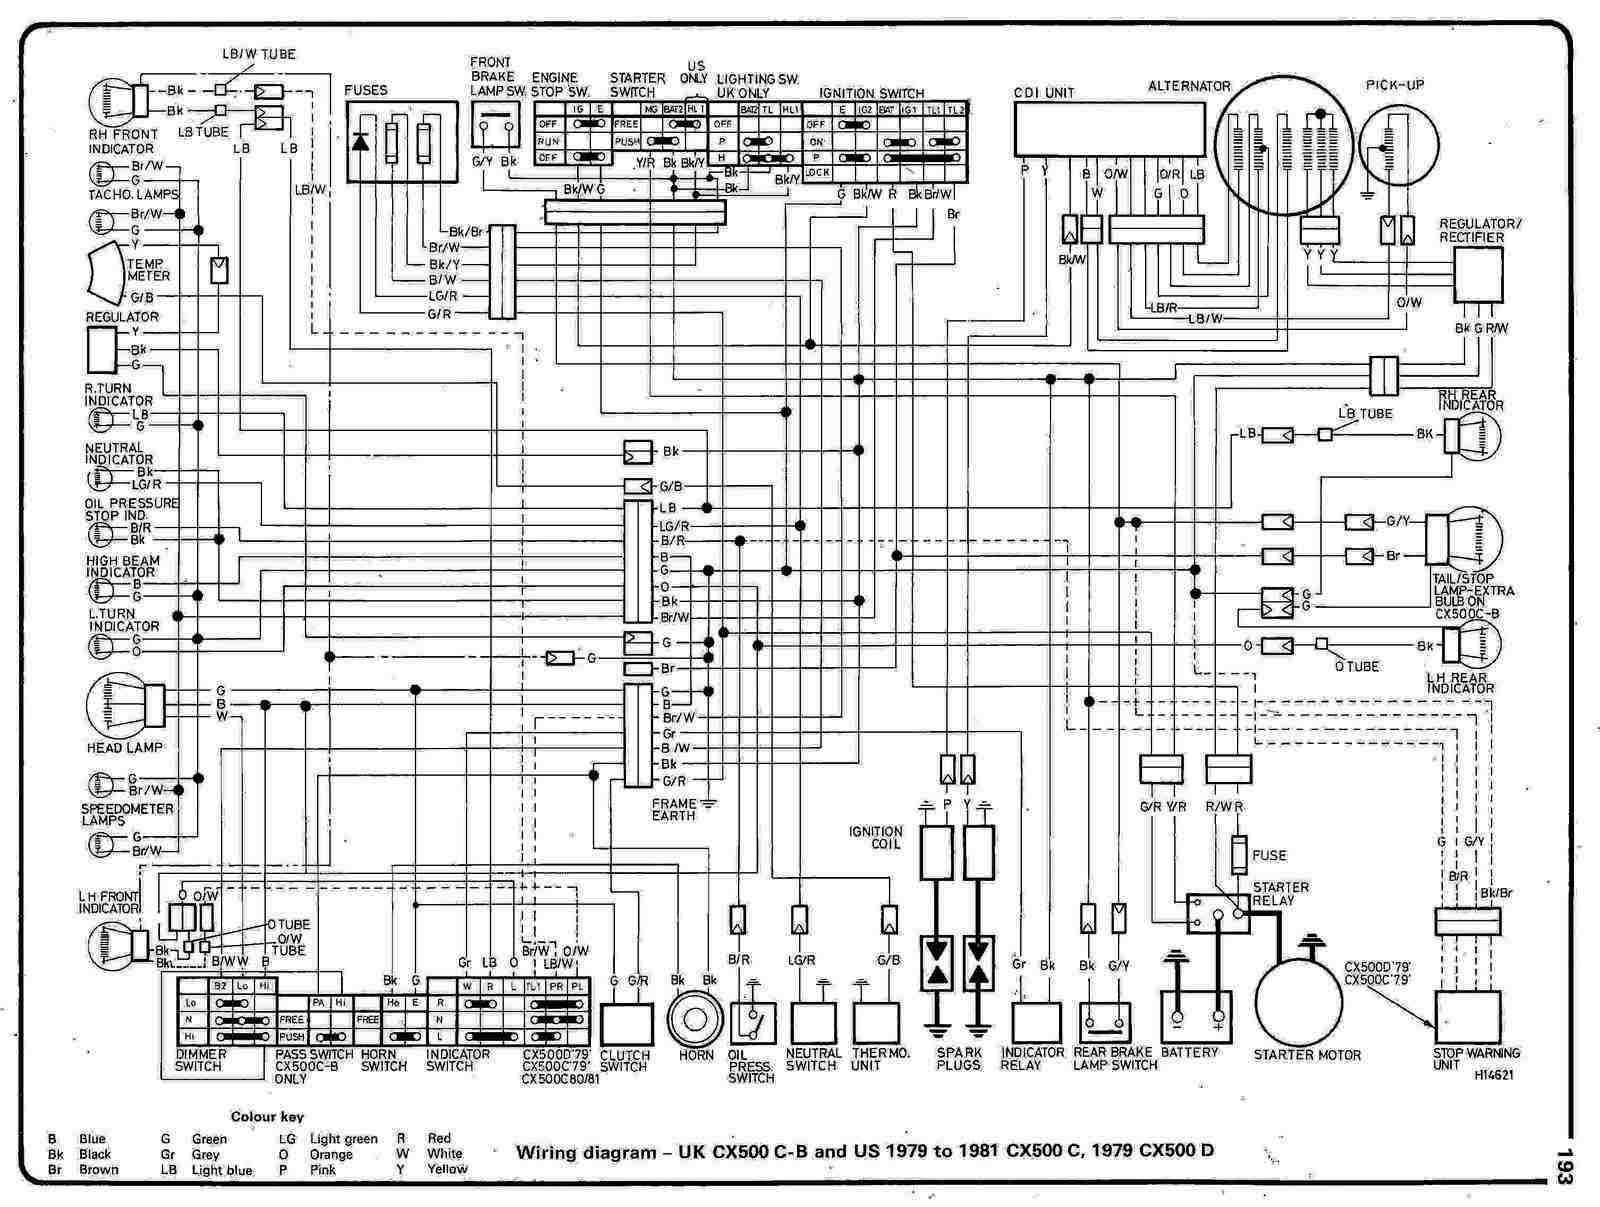 2018 F650 Wiring Diagram Honda Motorcycles Manual Pdf Wiring Diagram & Fault Codes Of 2018 F650 Wiring Diagram